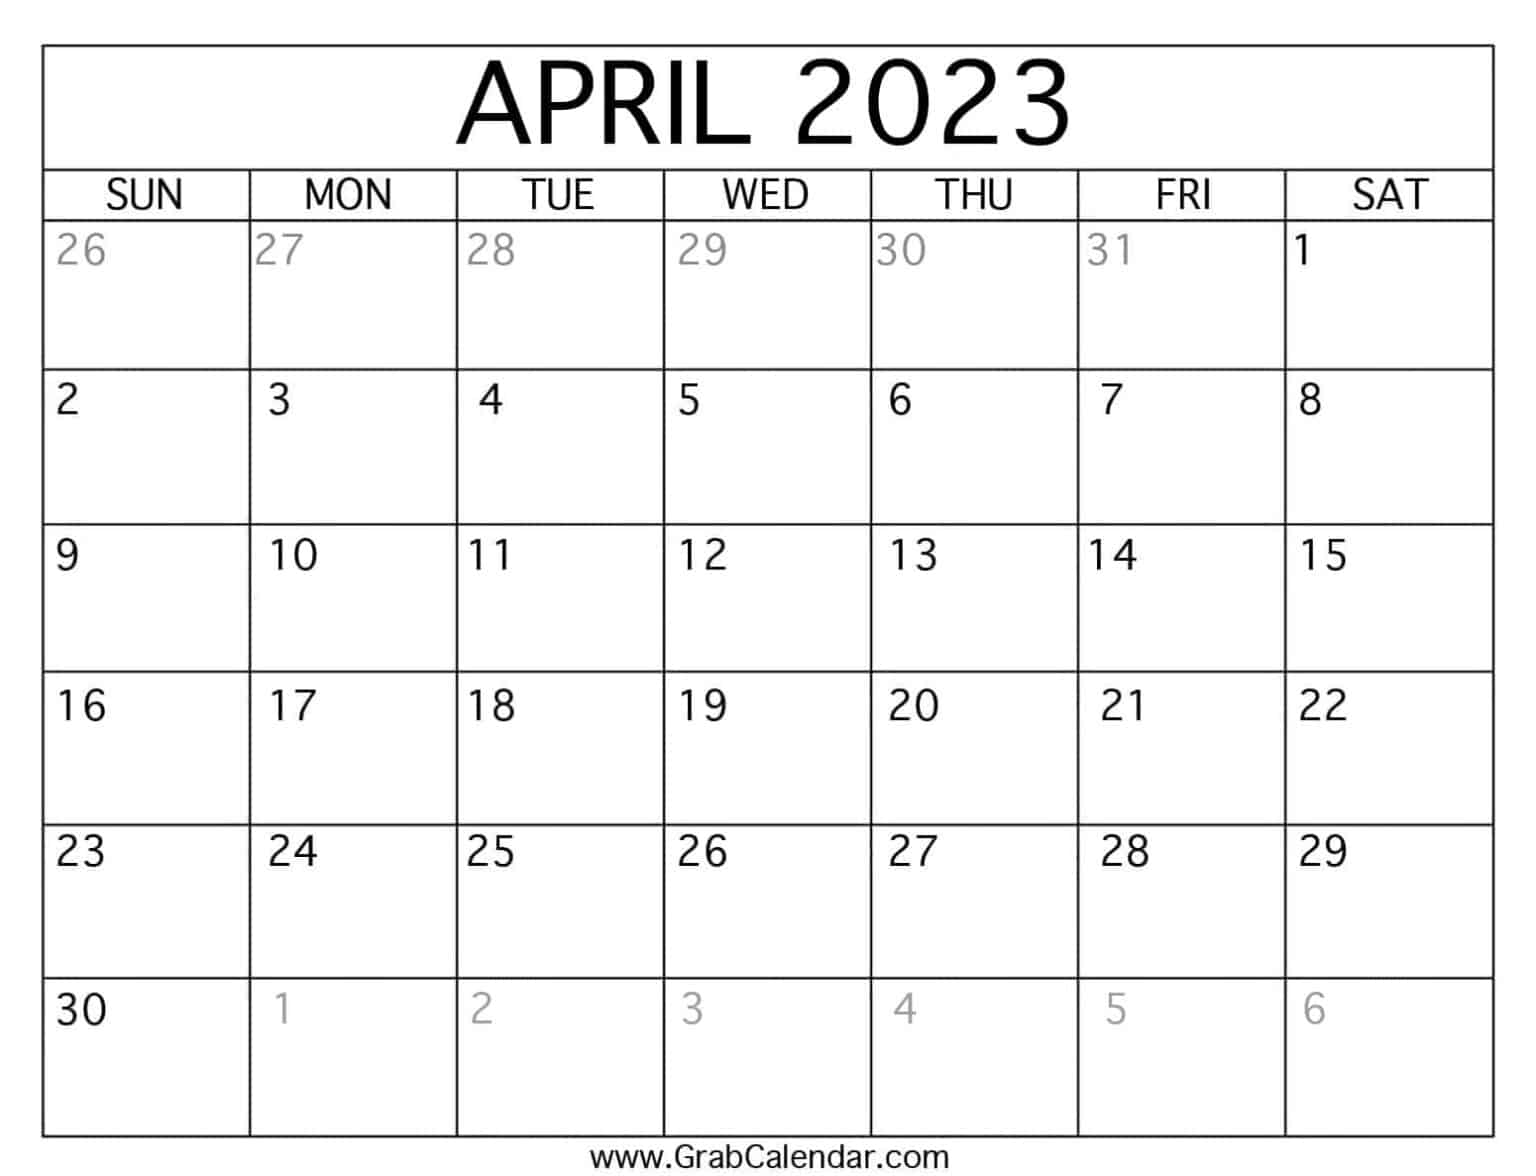 printable-april-2023-calendar